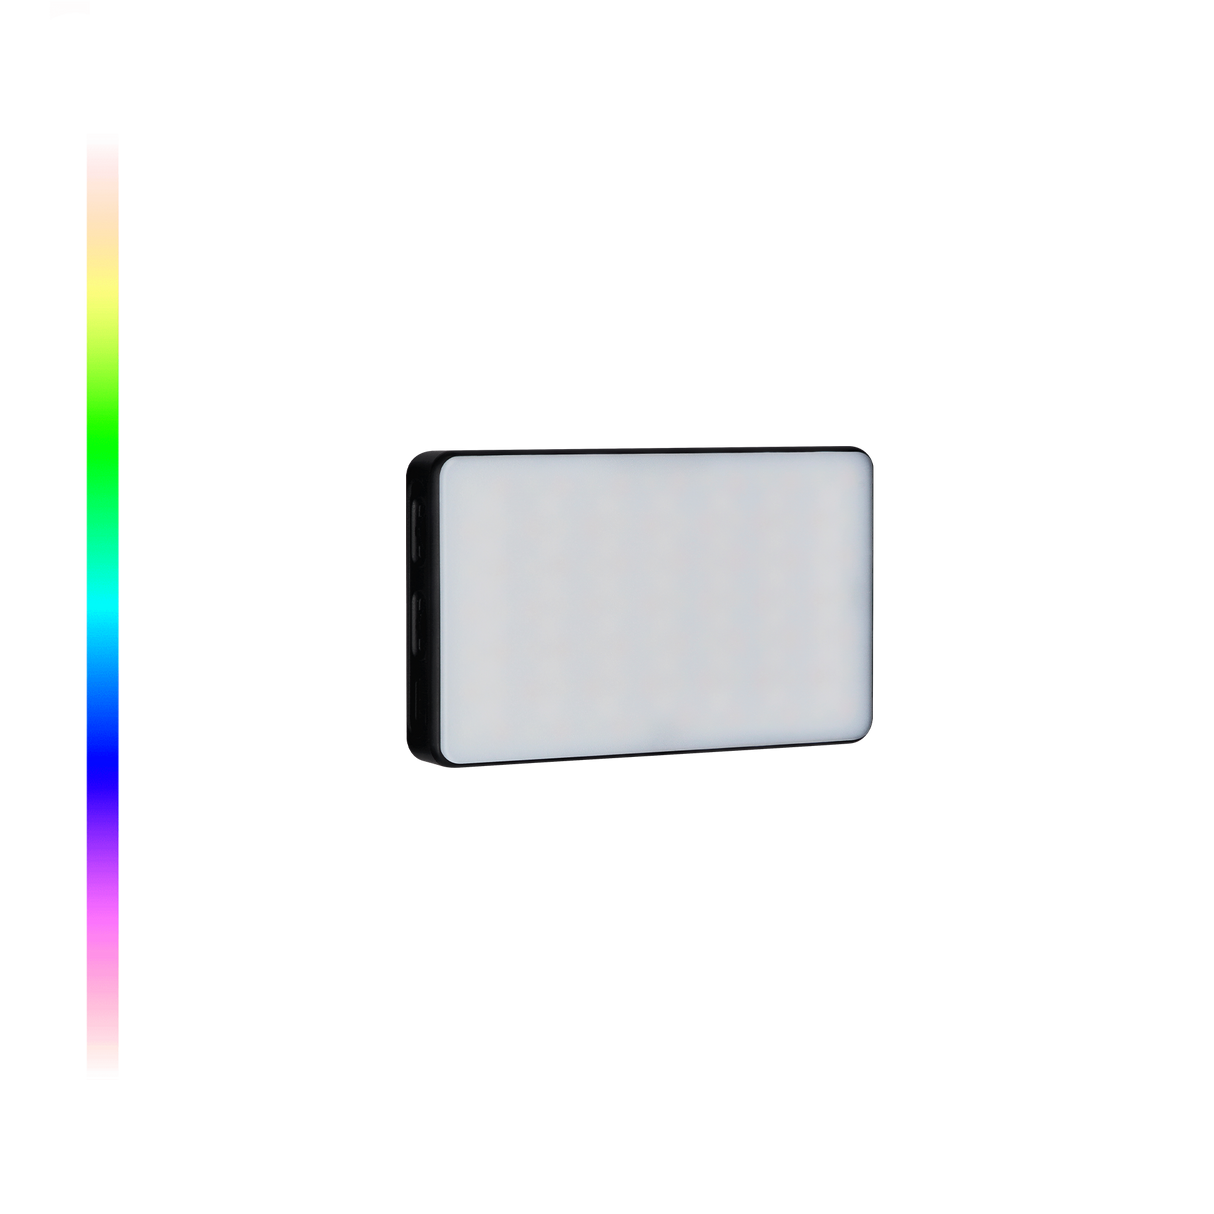 Rollei - LUMIS Mini LED - LED-Licht